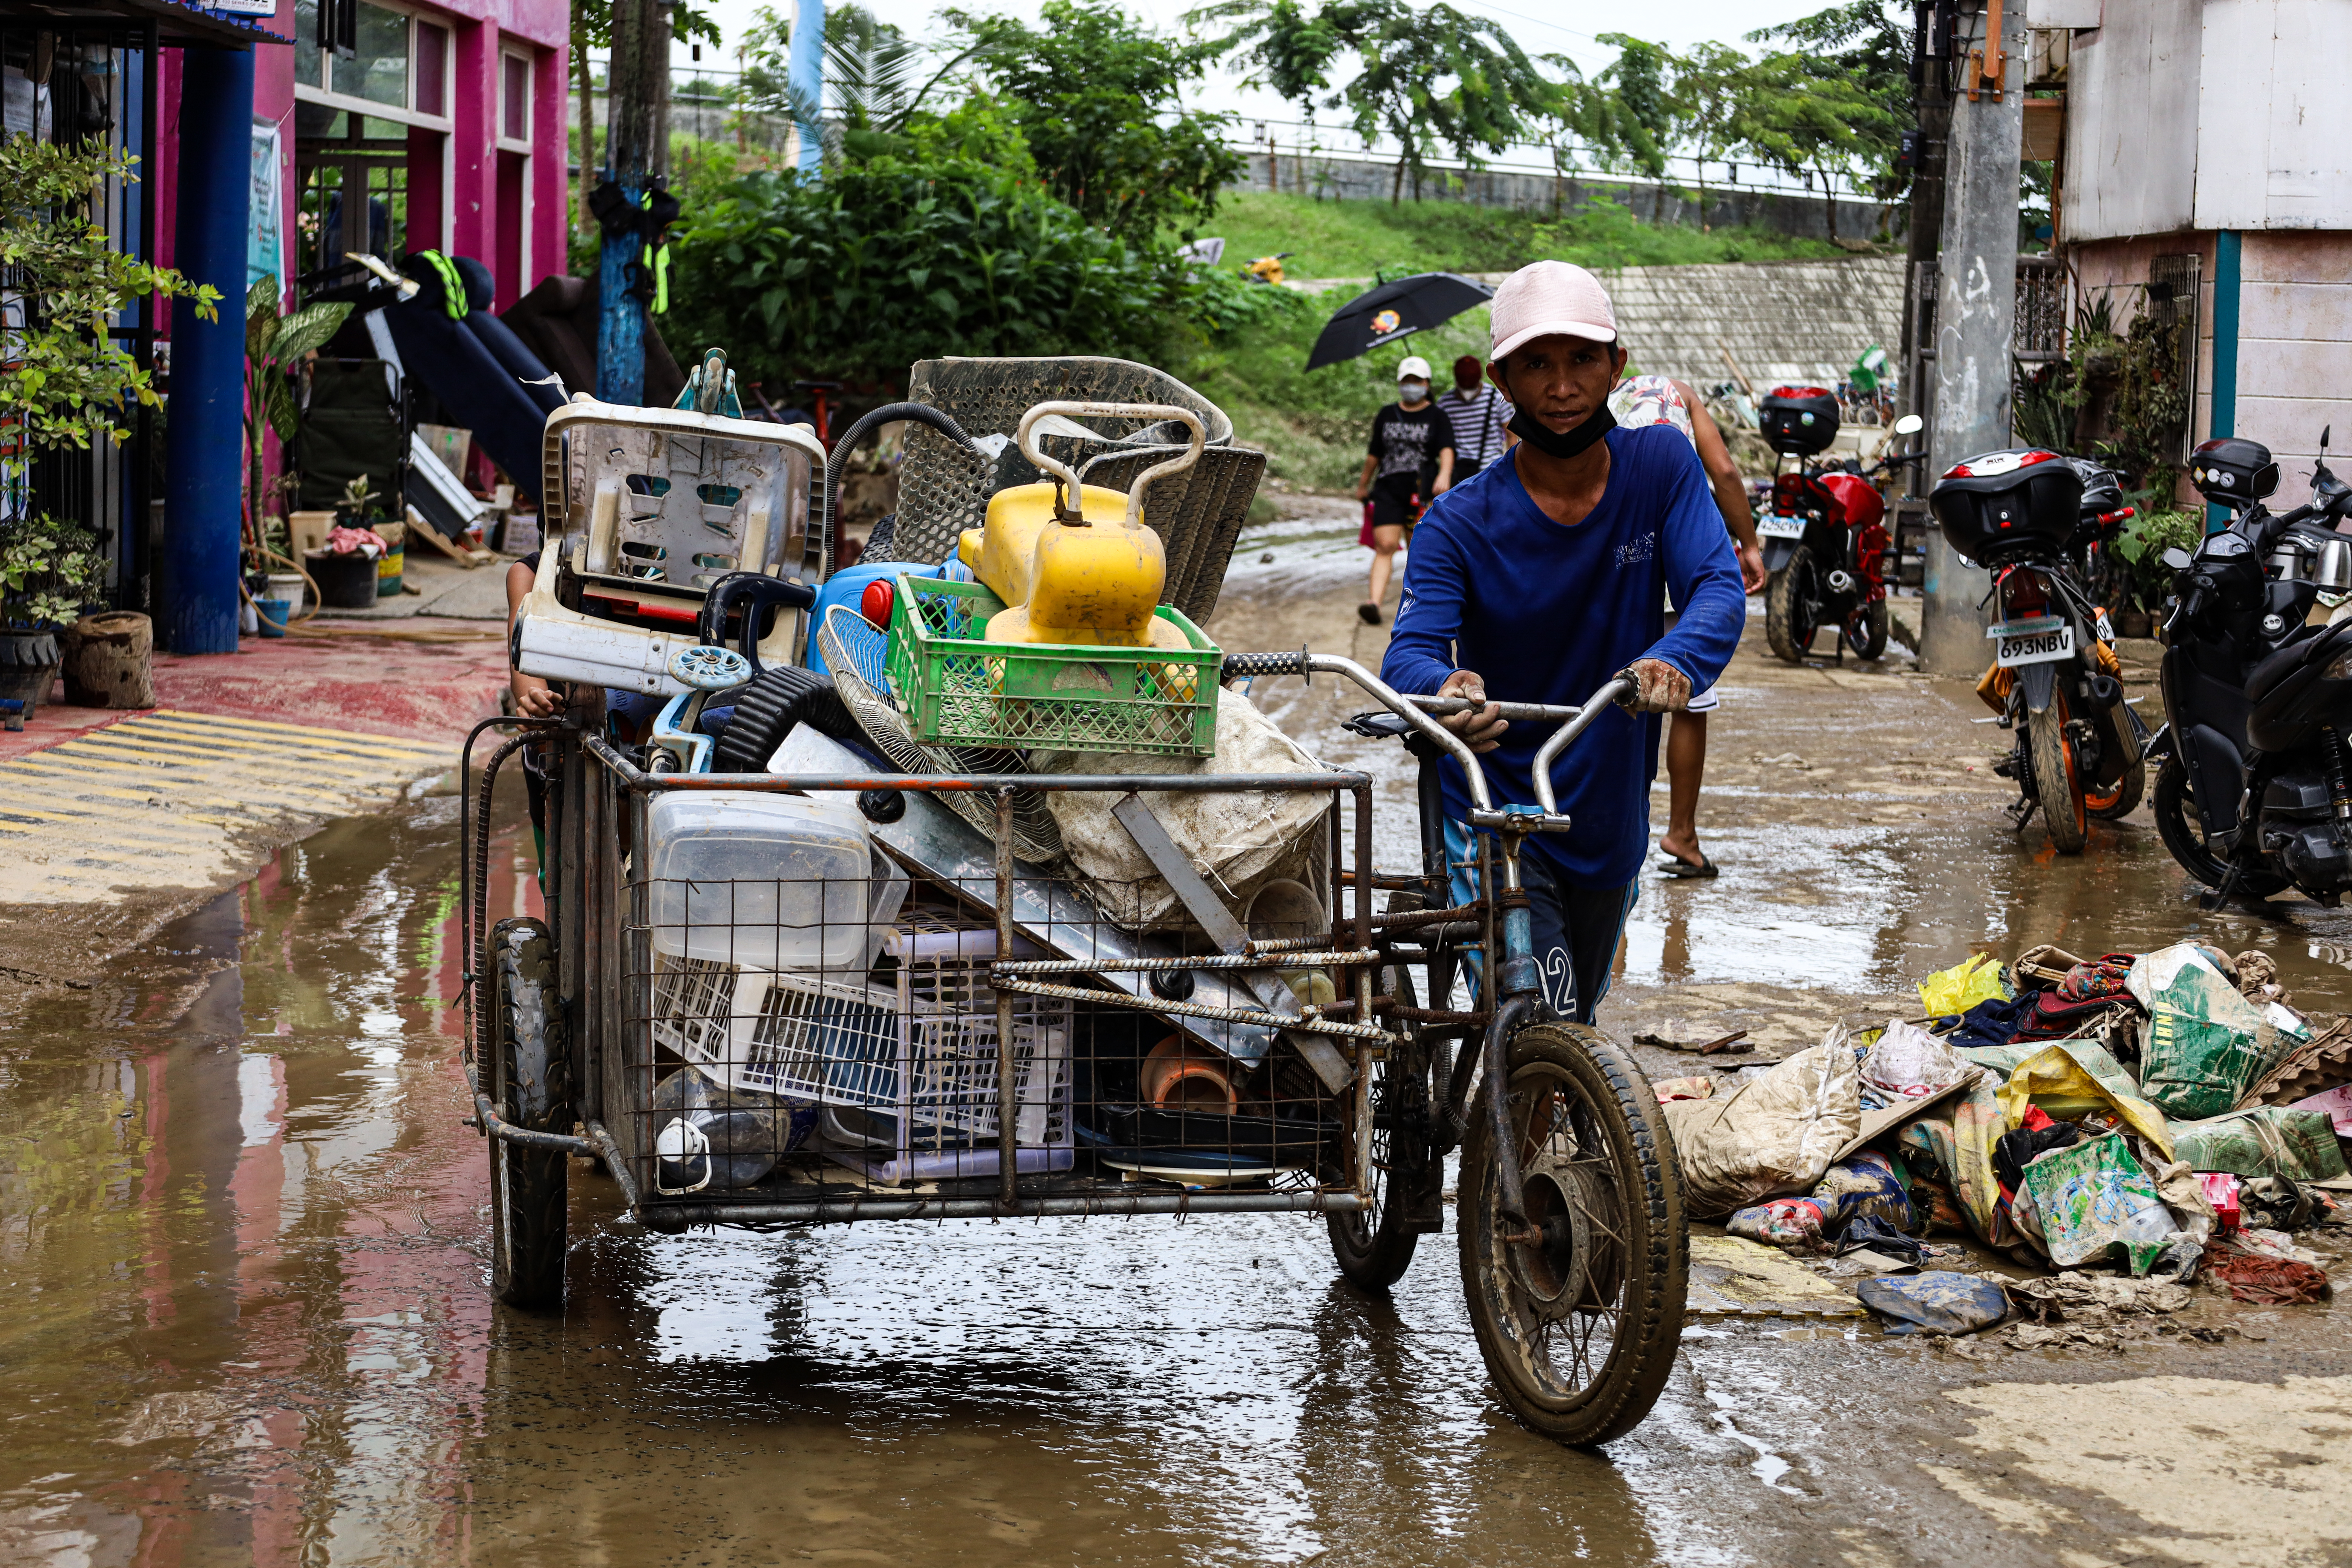 Man on bike with belongings in flooded street